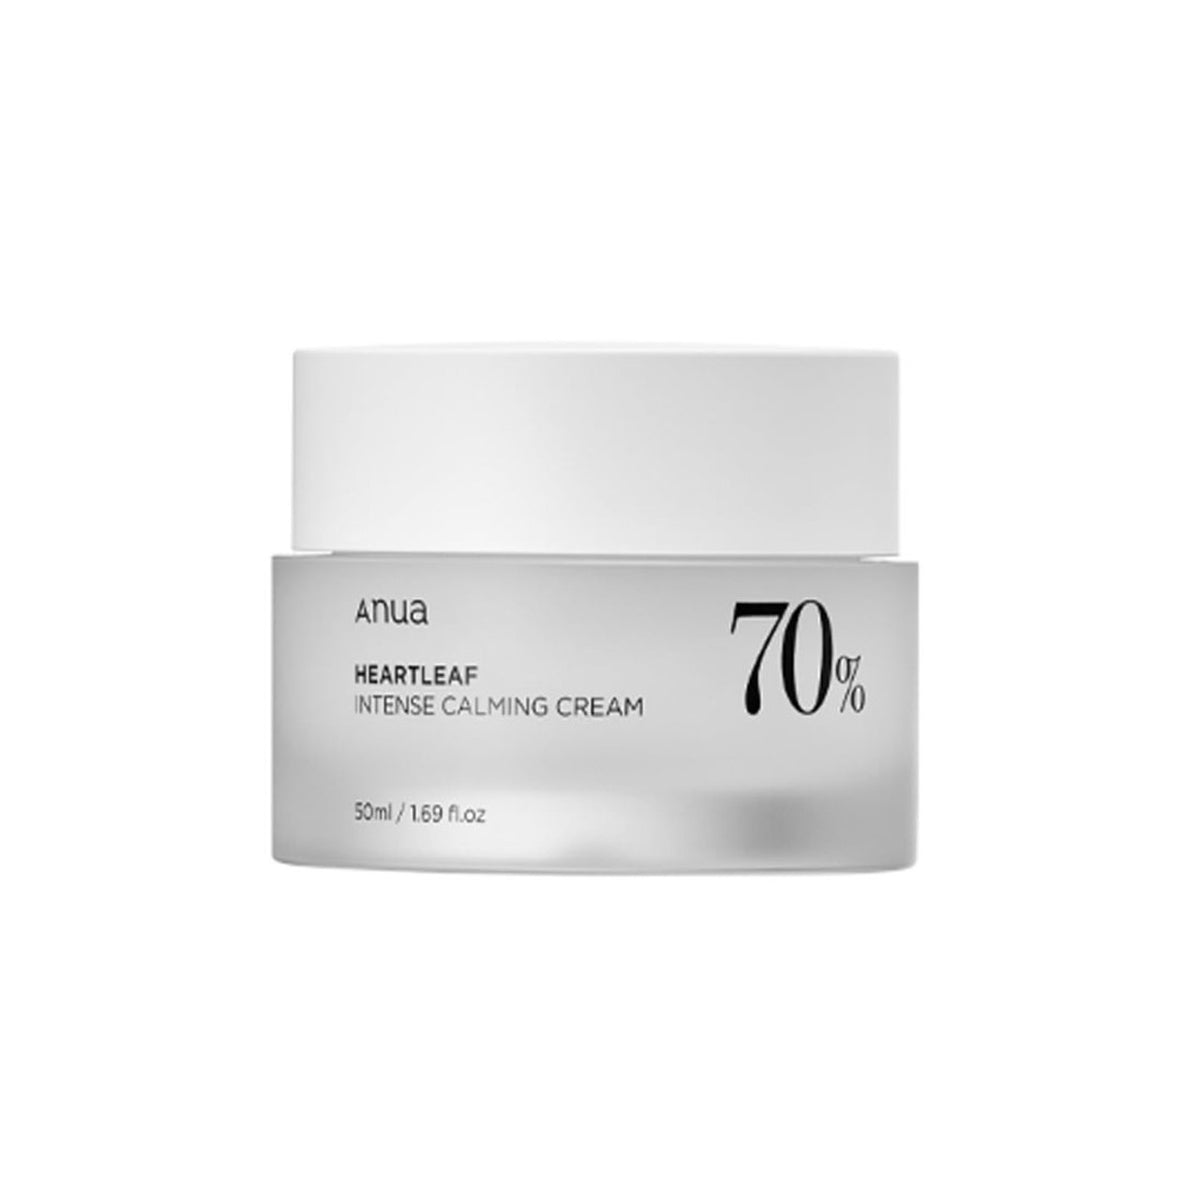 ANUA Heartleaf 70% Intense Calming Cream 50ml – Beauty & Seoul